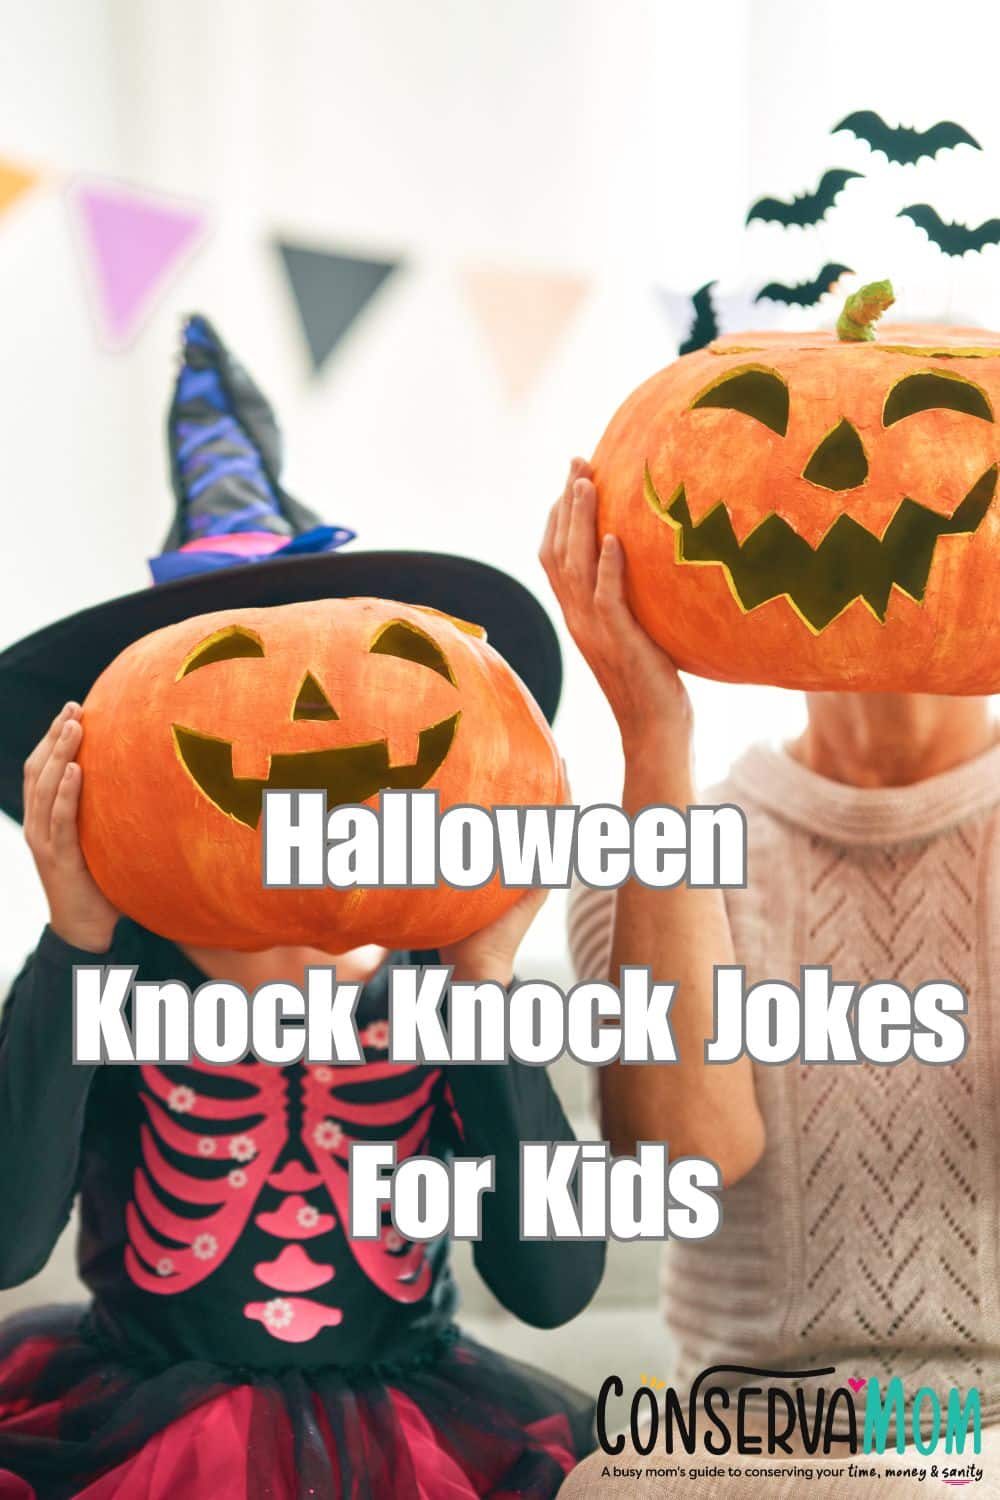 Halloween knock knock jokes for kids